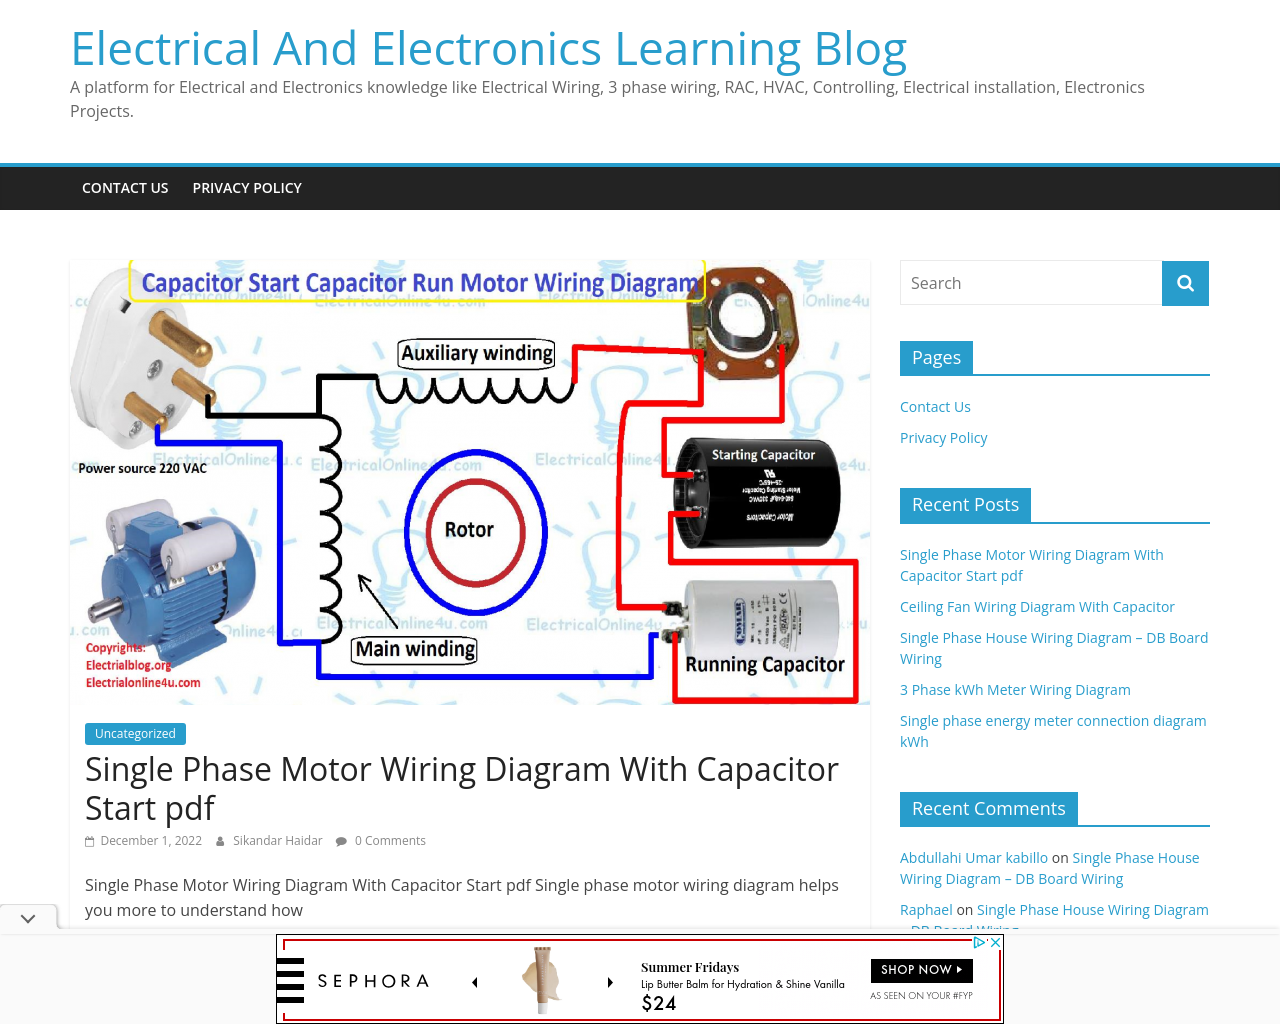 electricalblog.org